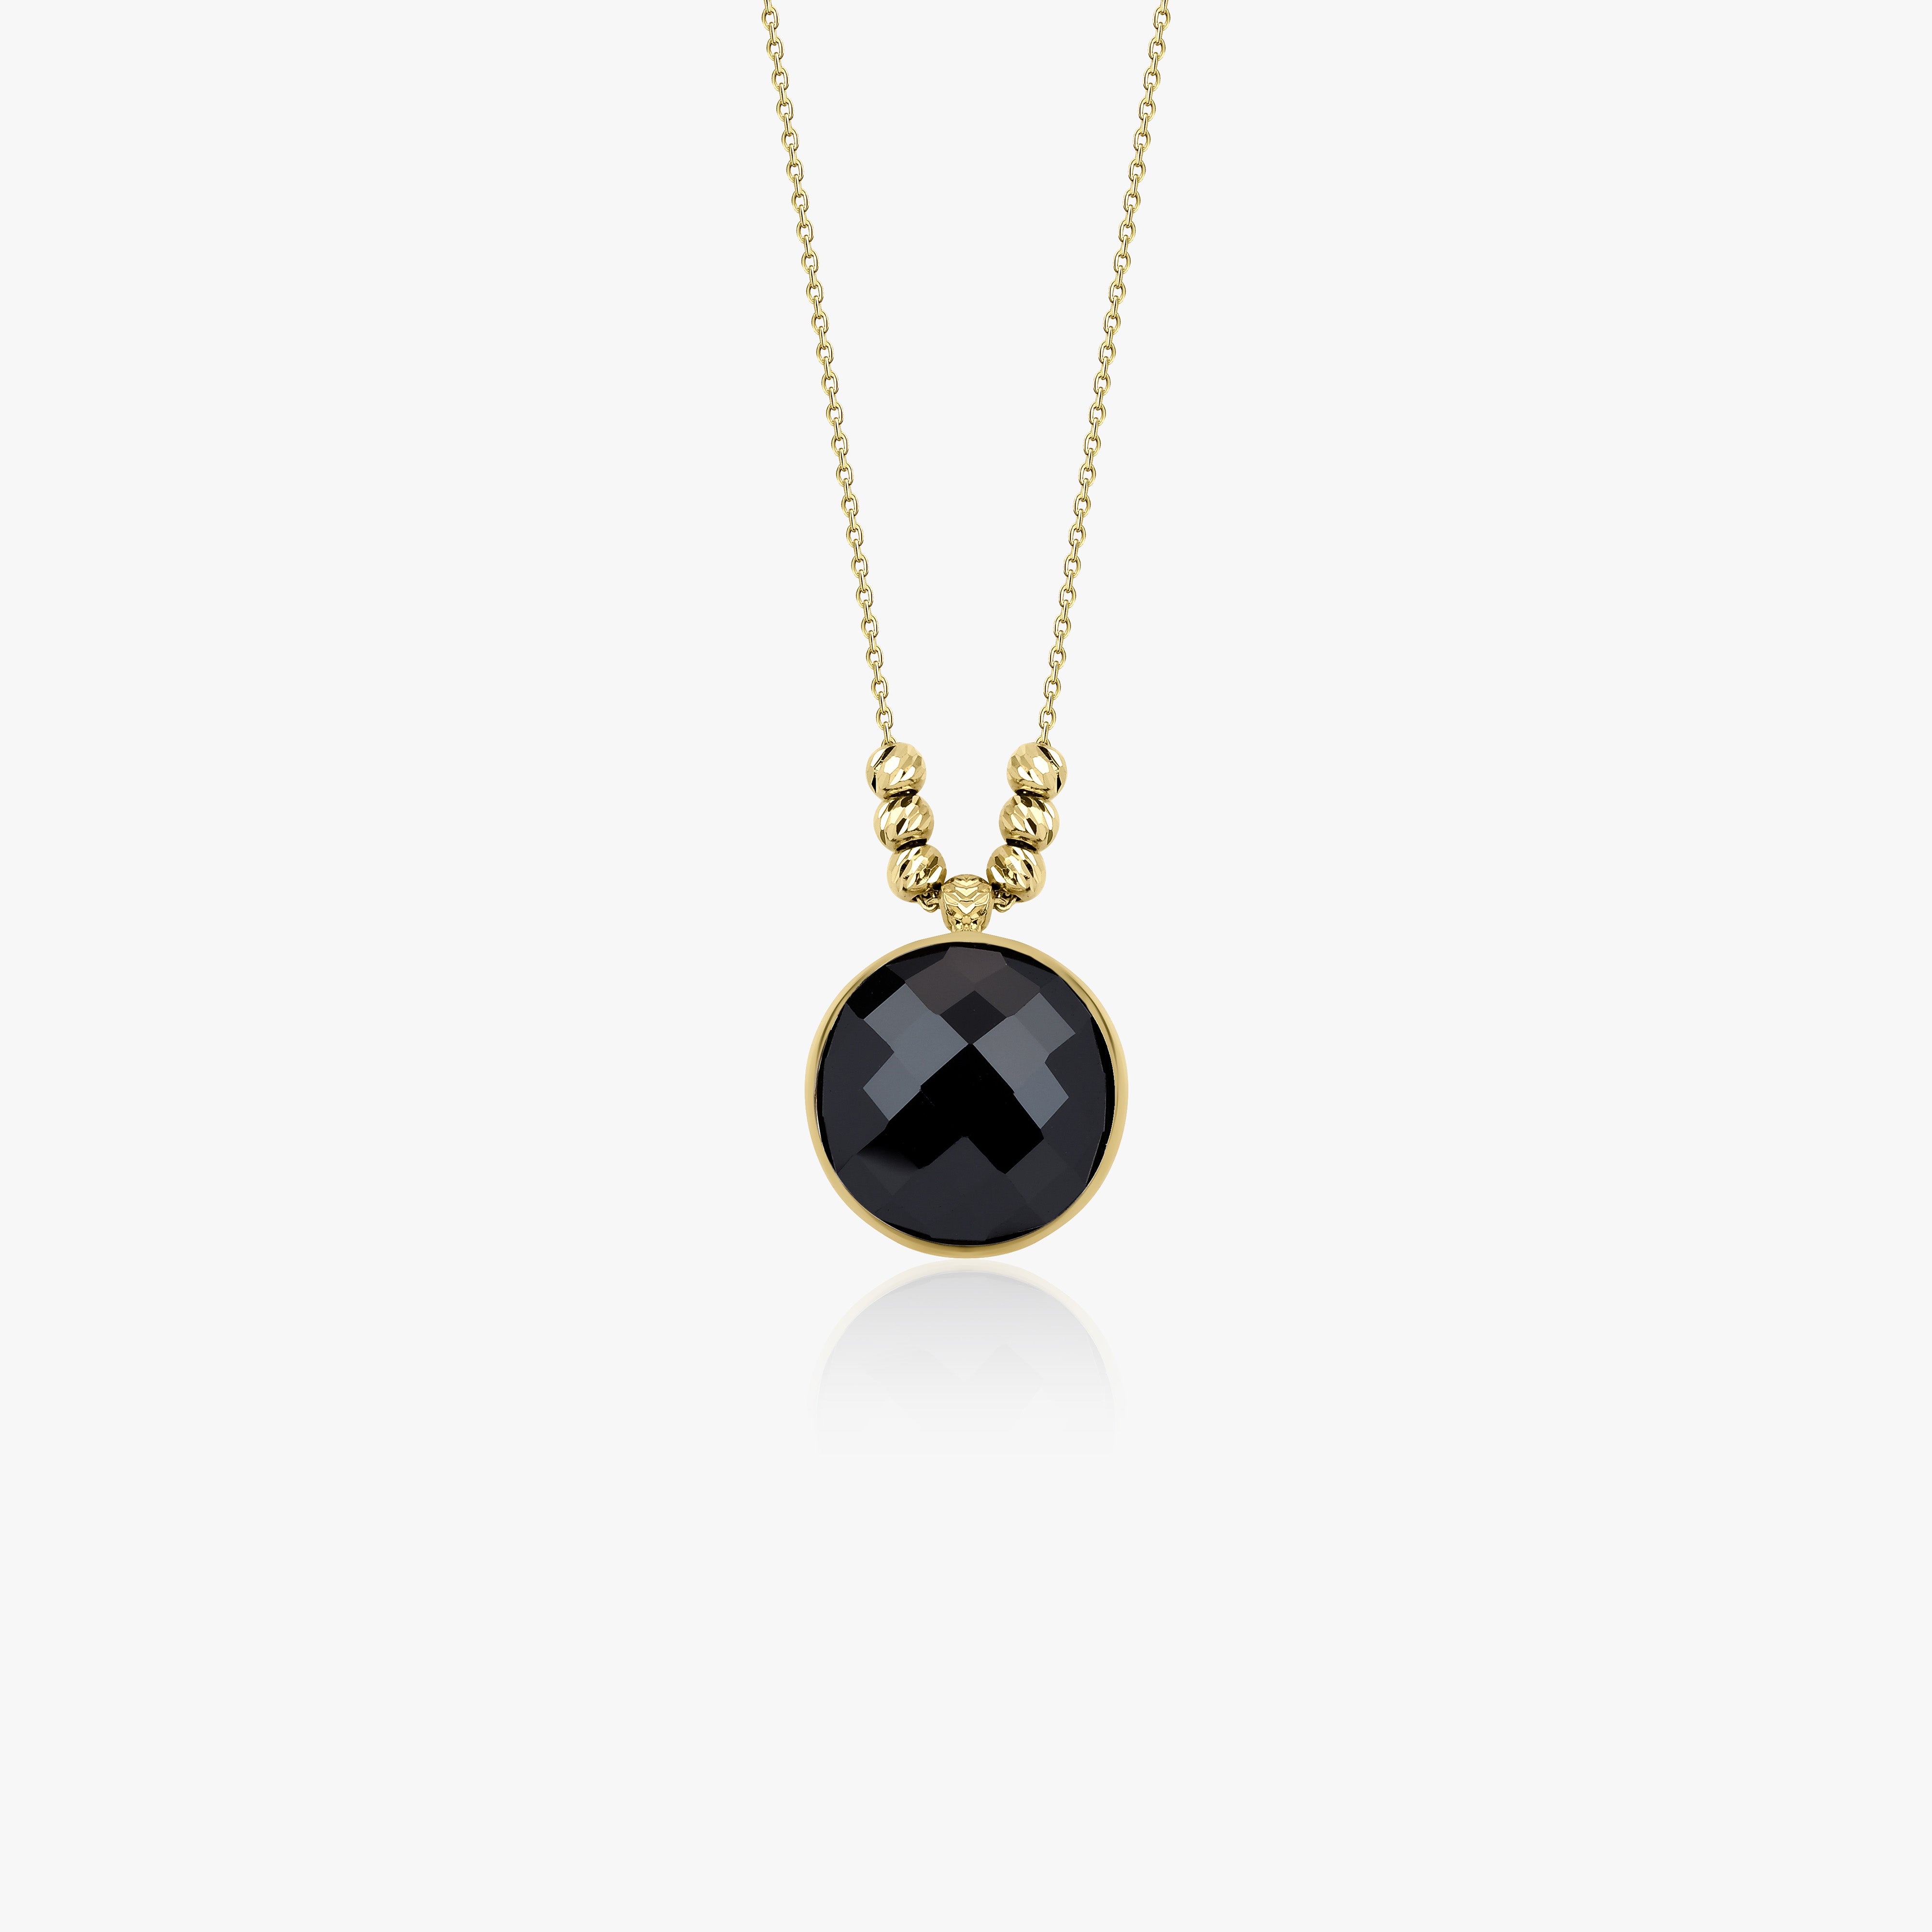 Black Crystal Pendant Necklace in 14K Gold